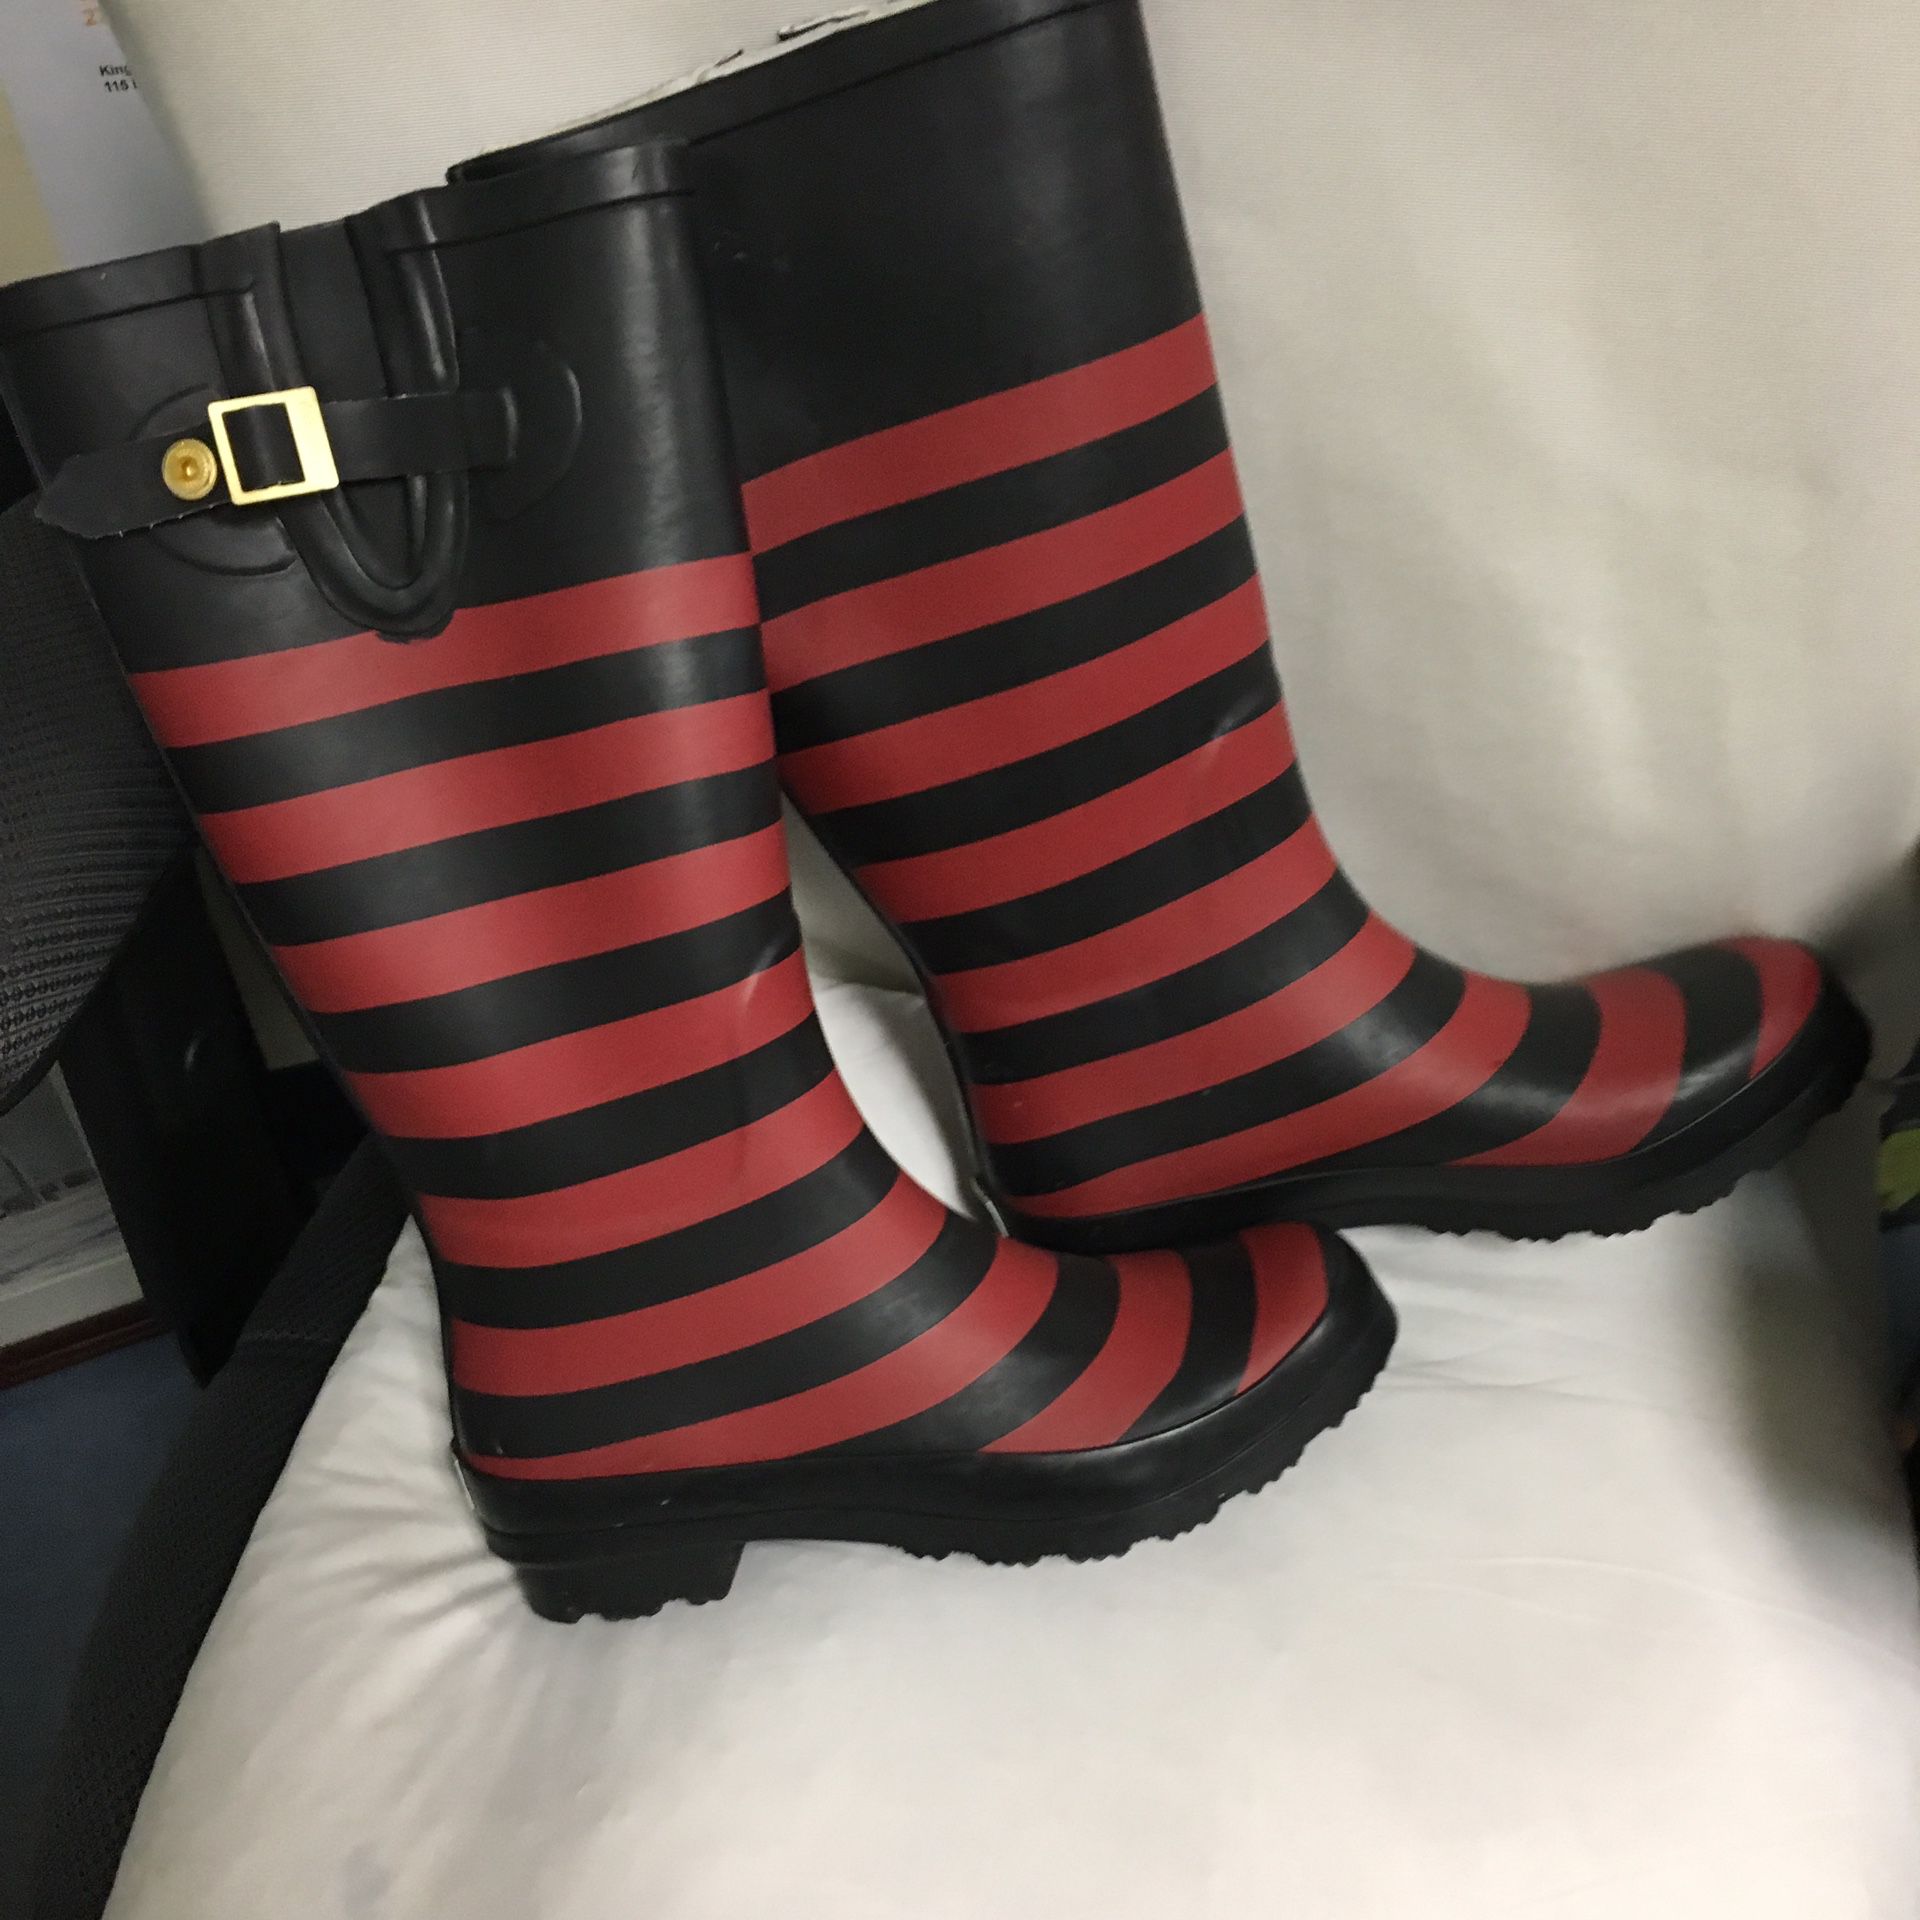 Lillybee designer rain boots